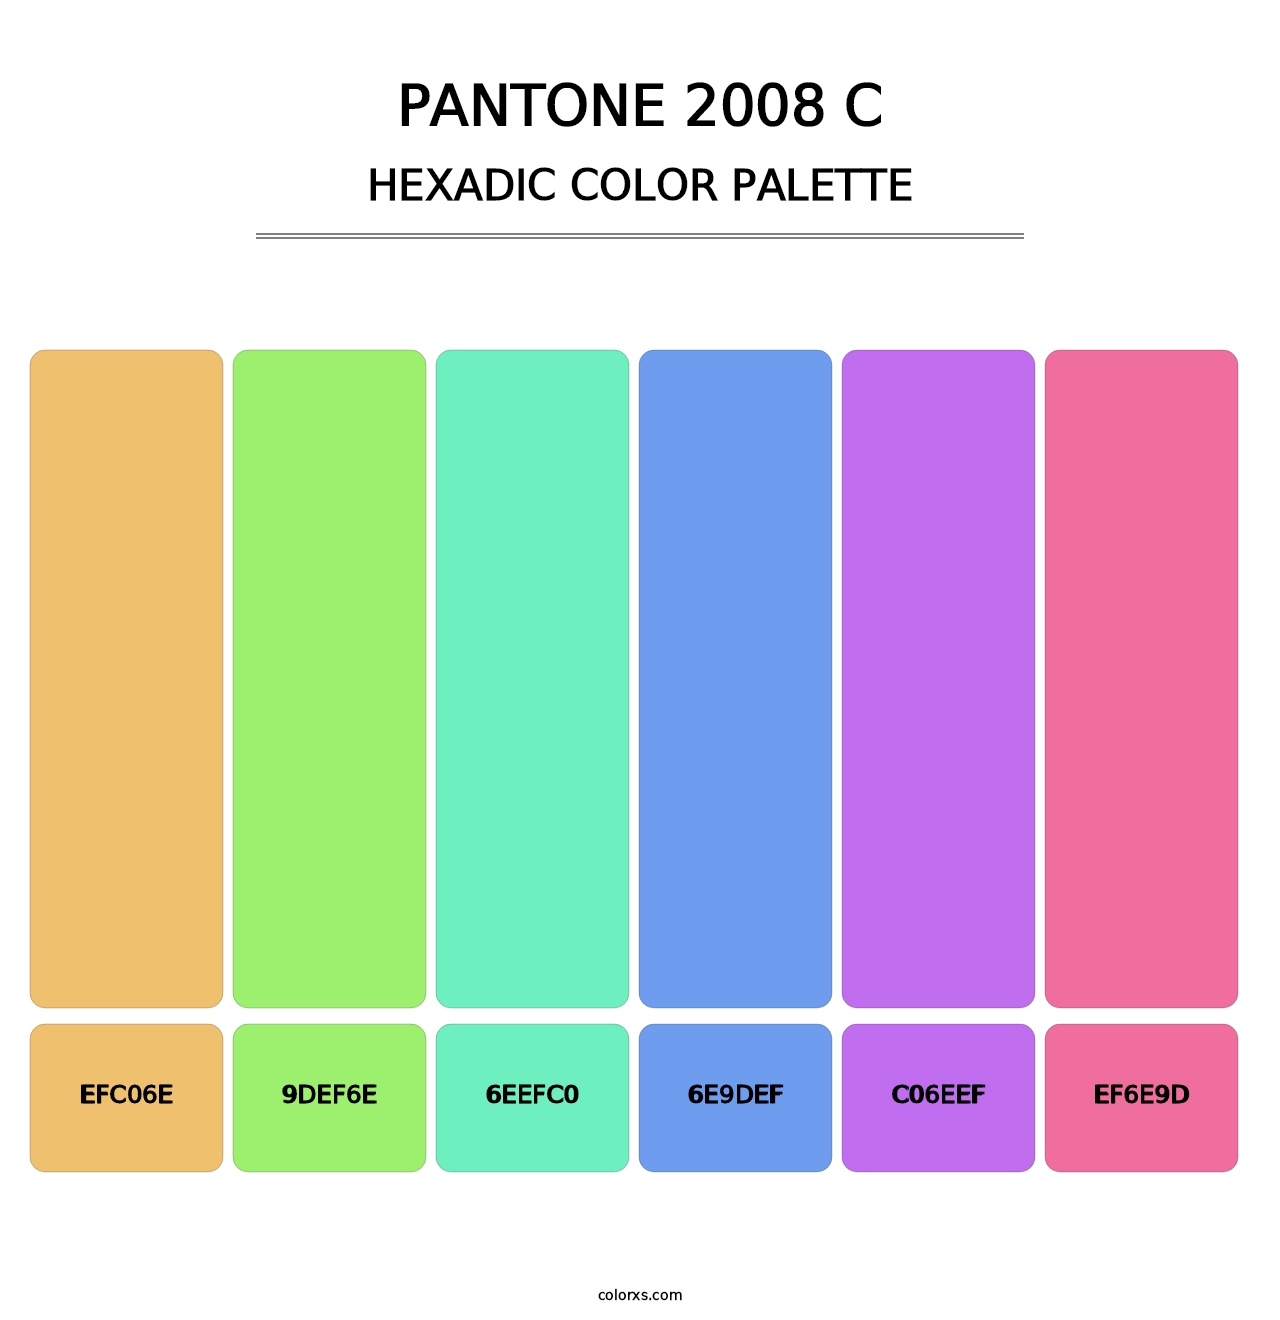 PANTONE 2008 C - Hexadic Color Palette